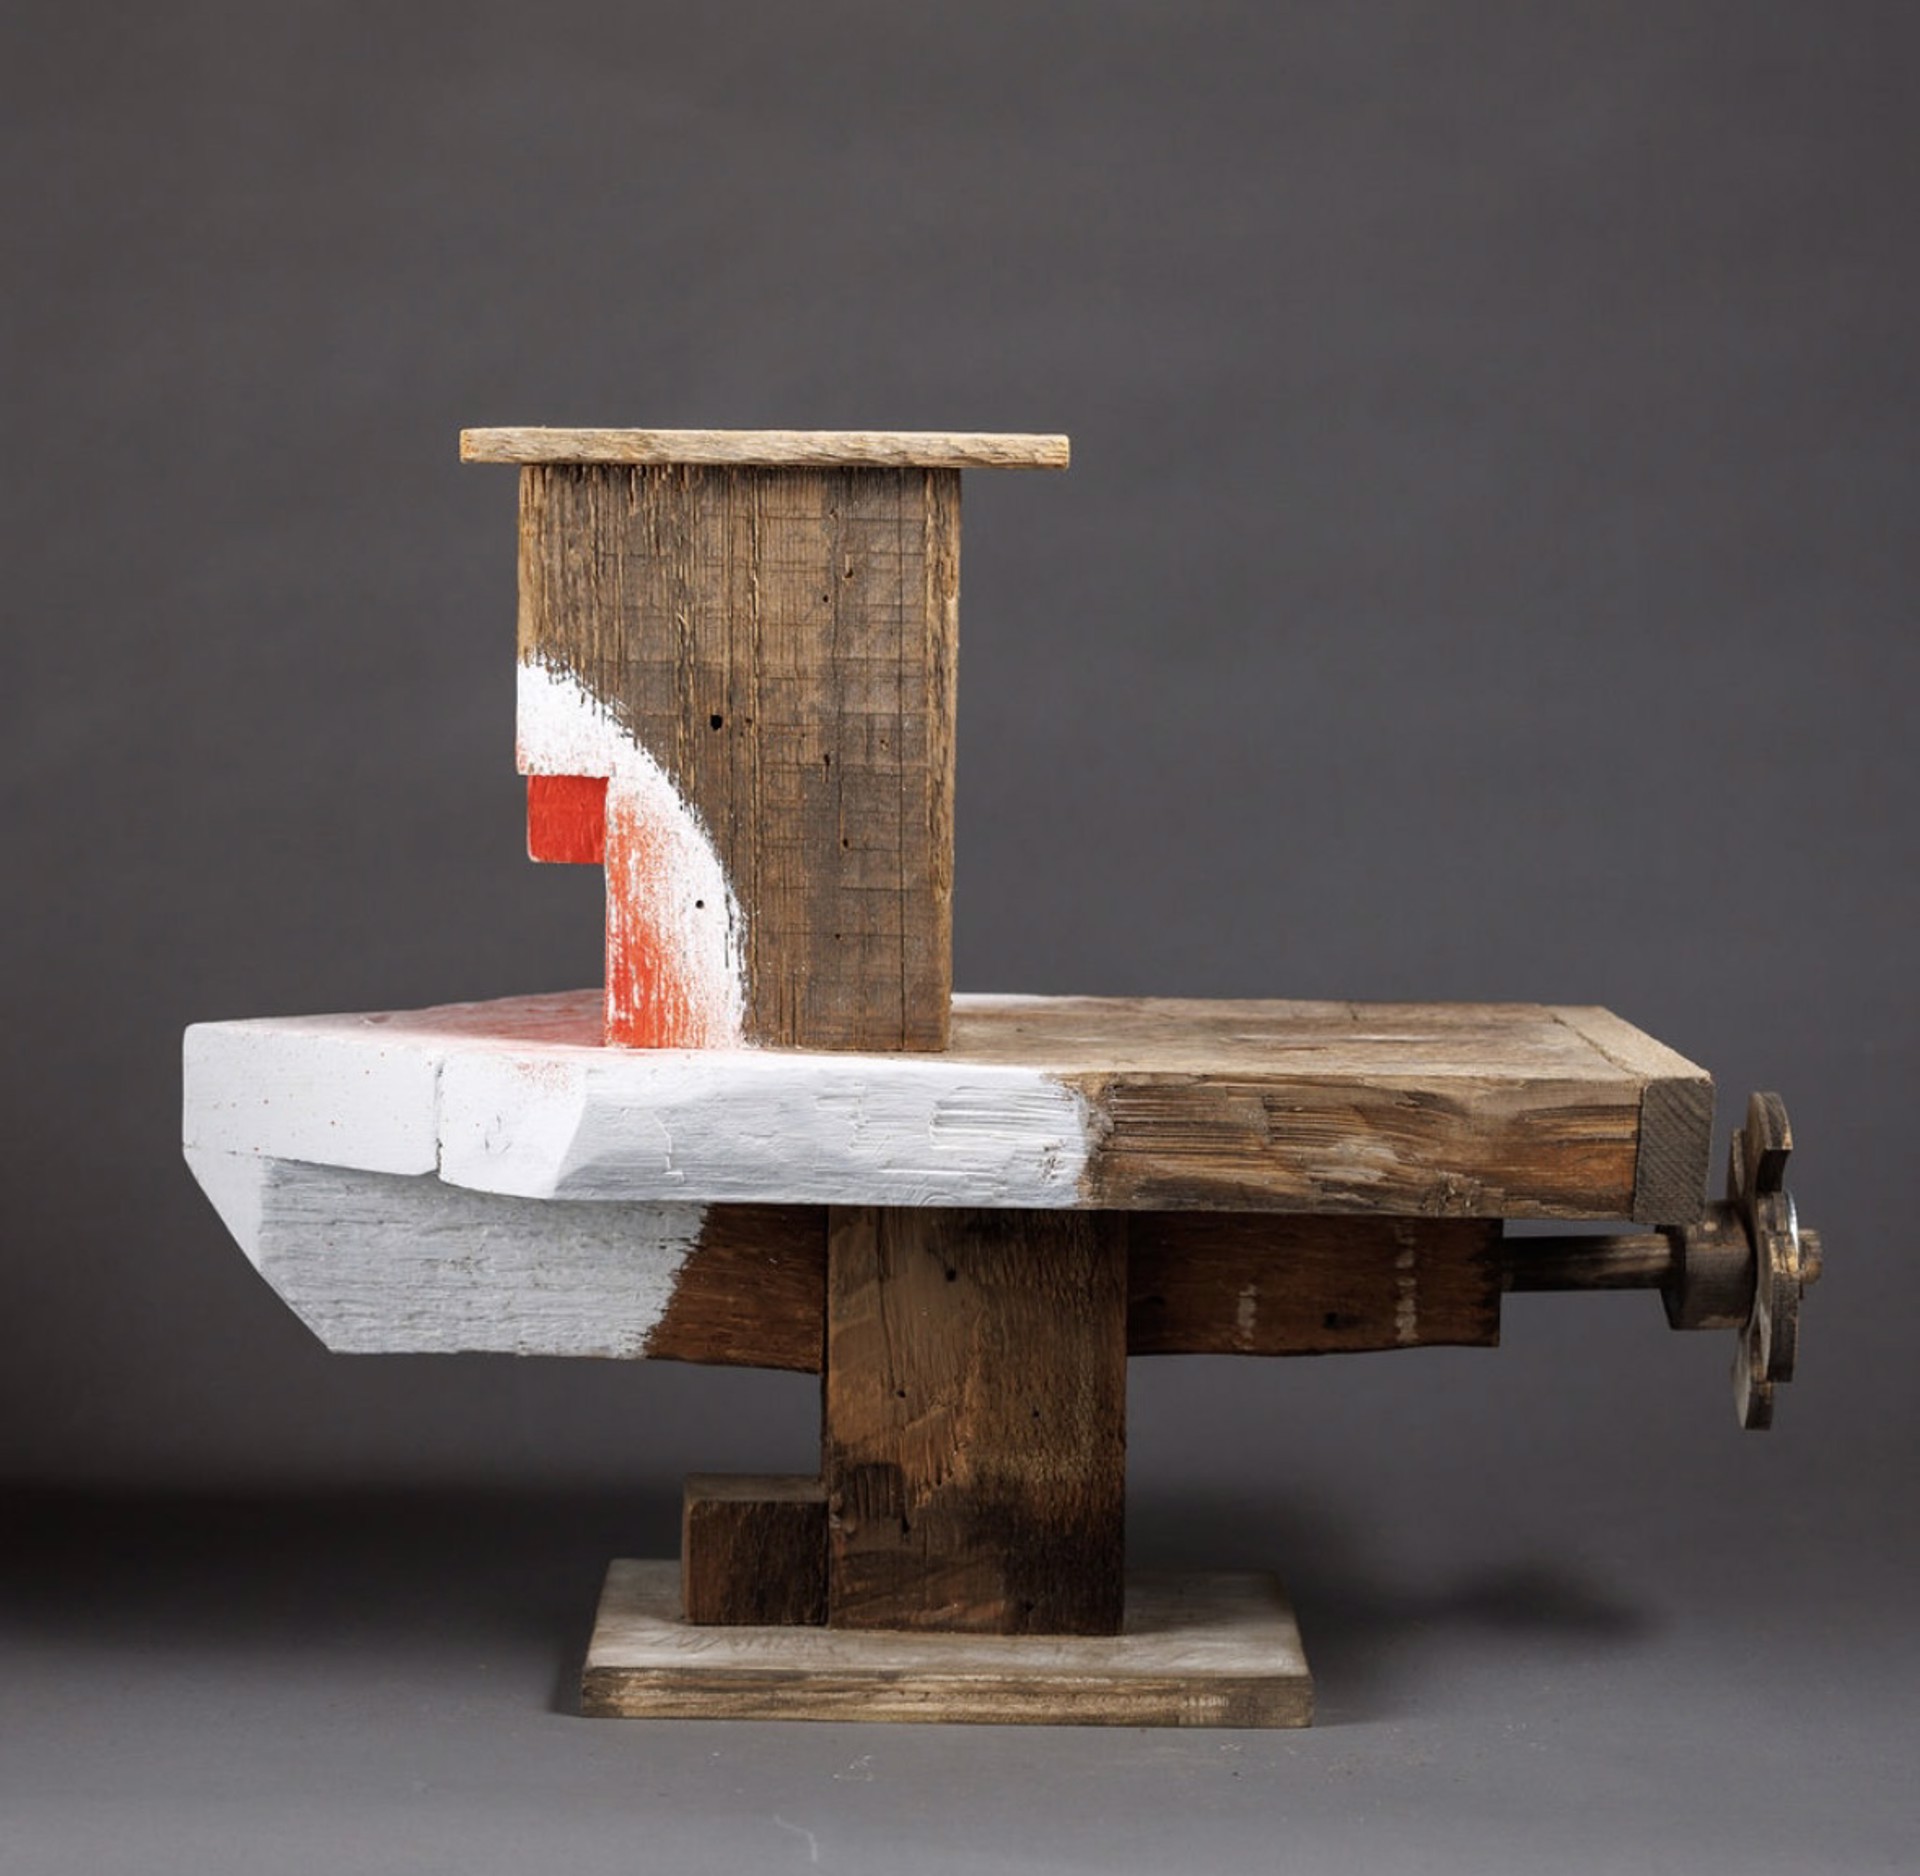 One-legged boat by Matthew Barter